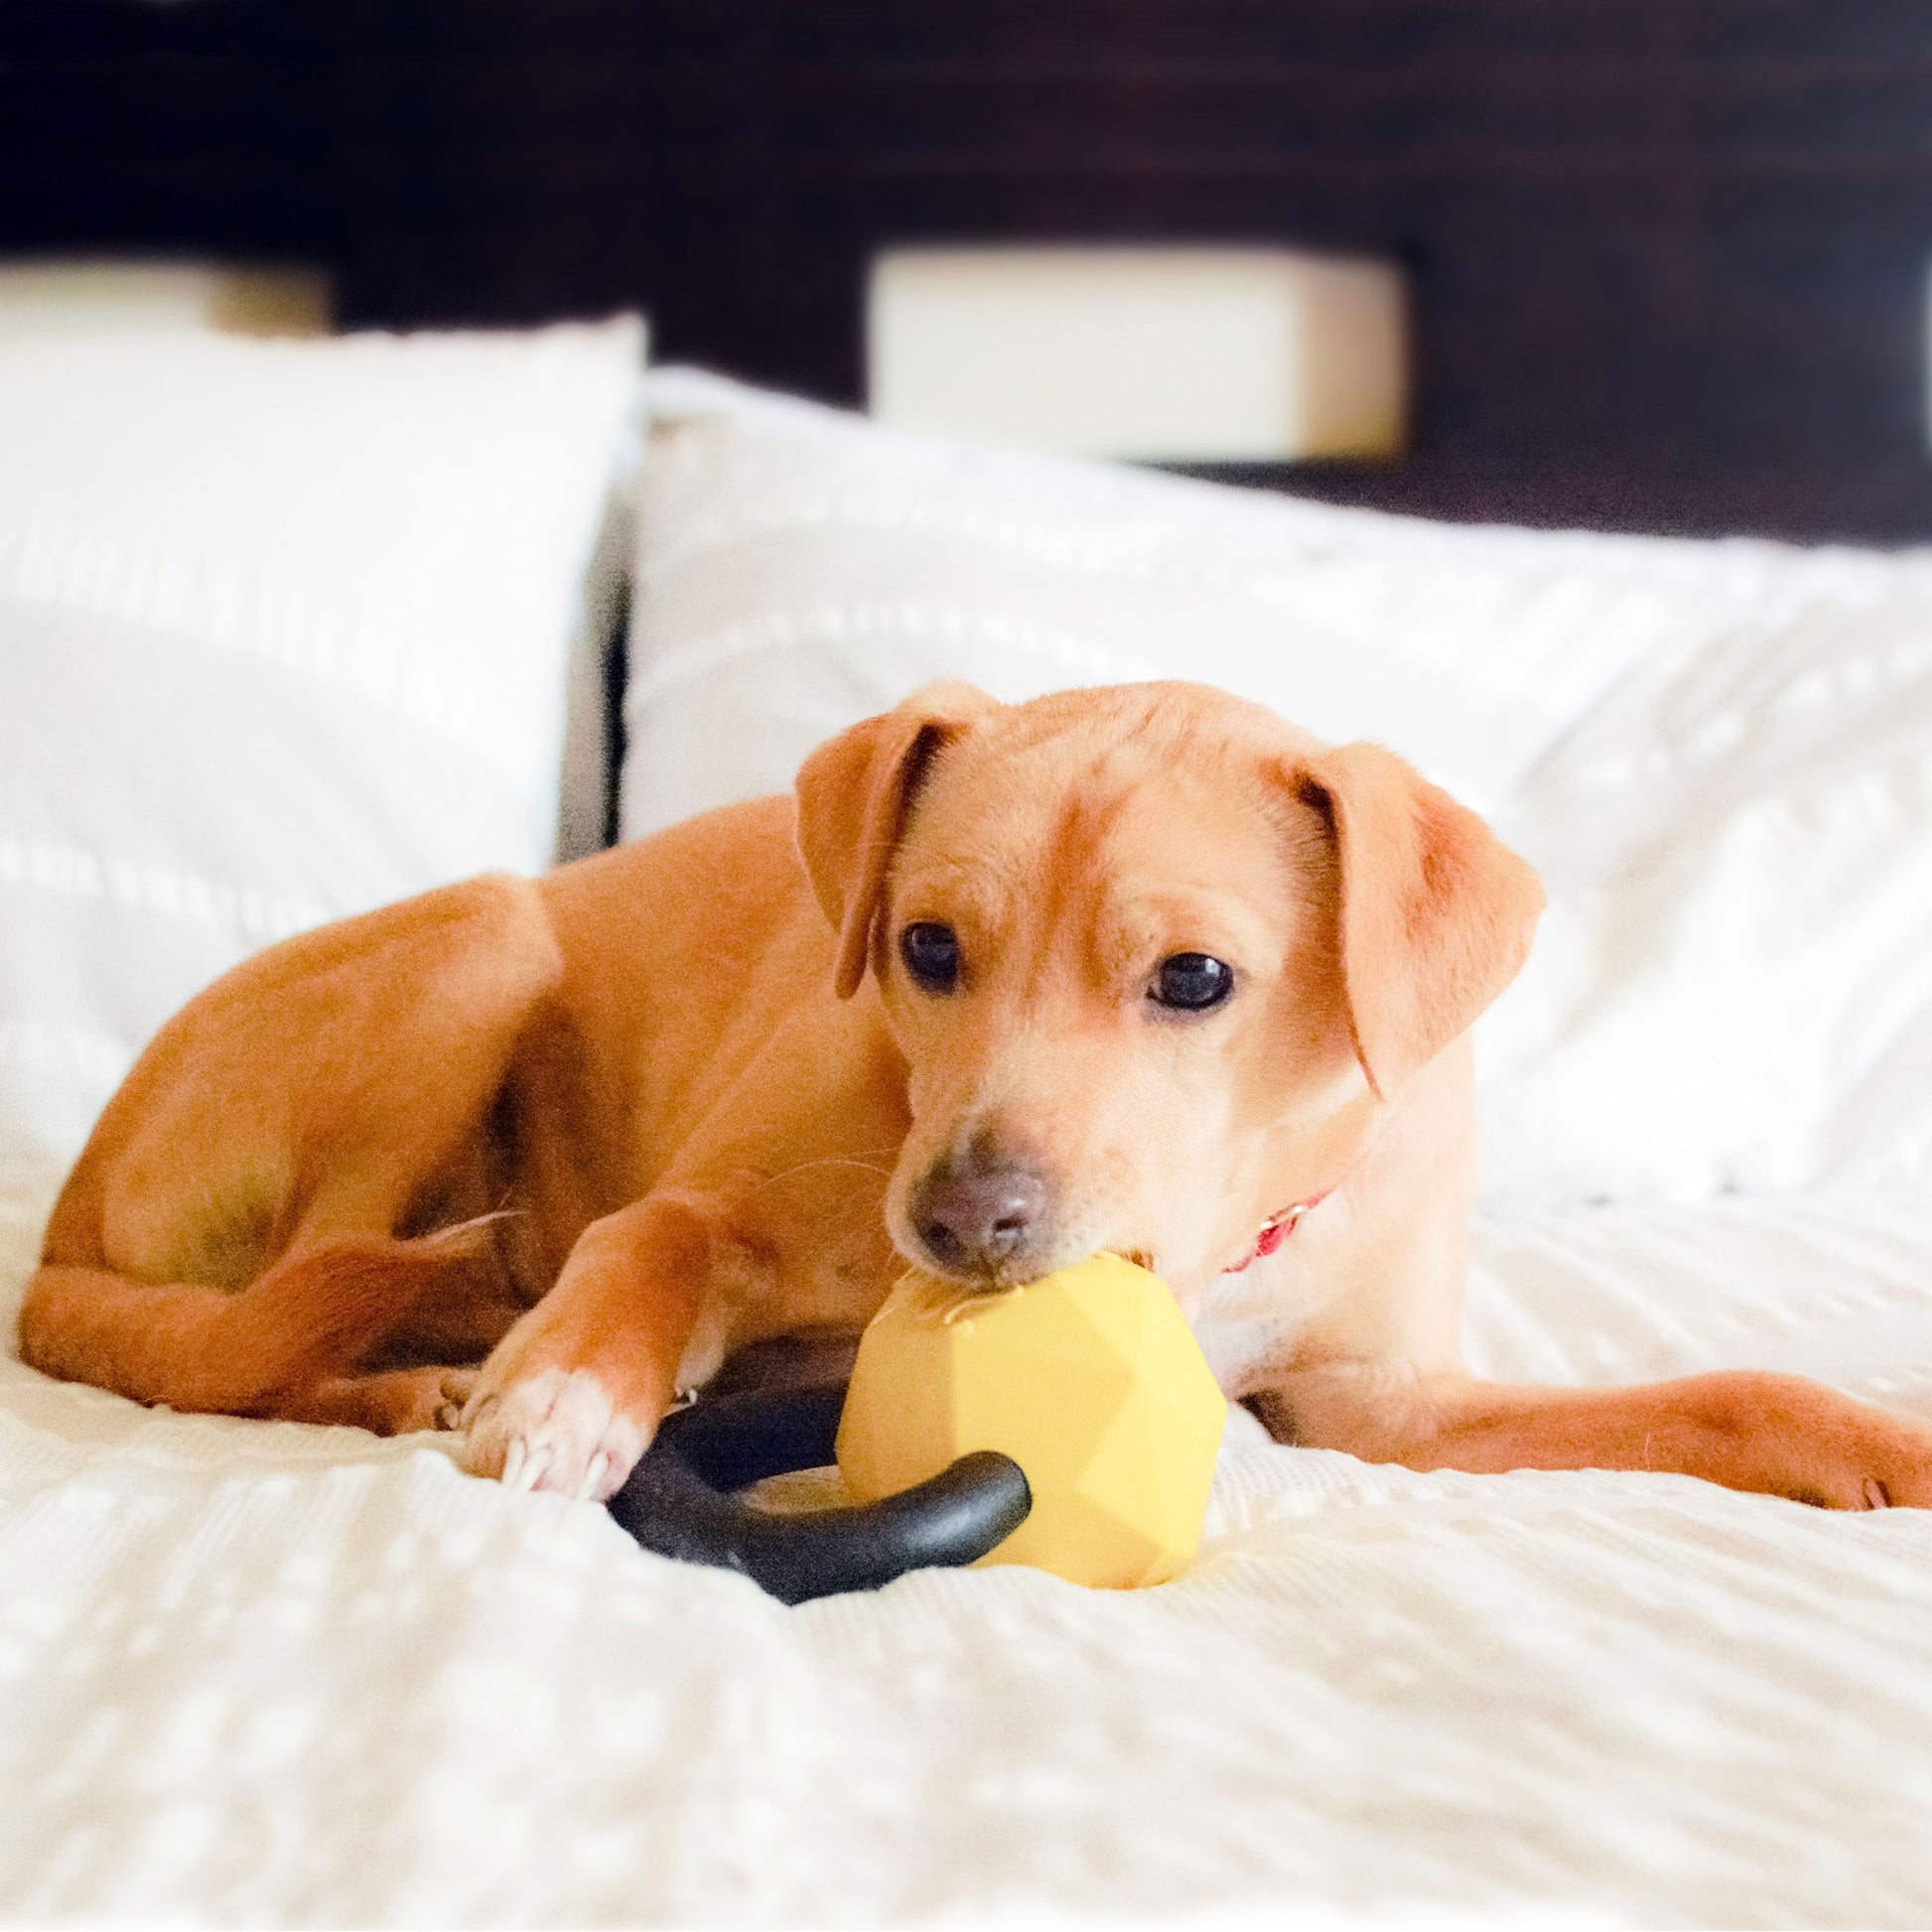 Dog Chew Toys | Treat Dispensing Dog Toys - Large Kettlebell